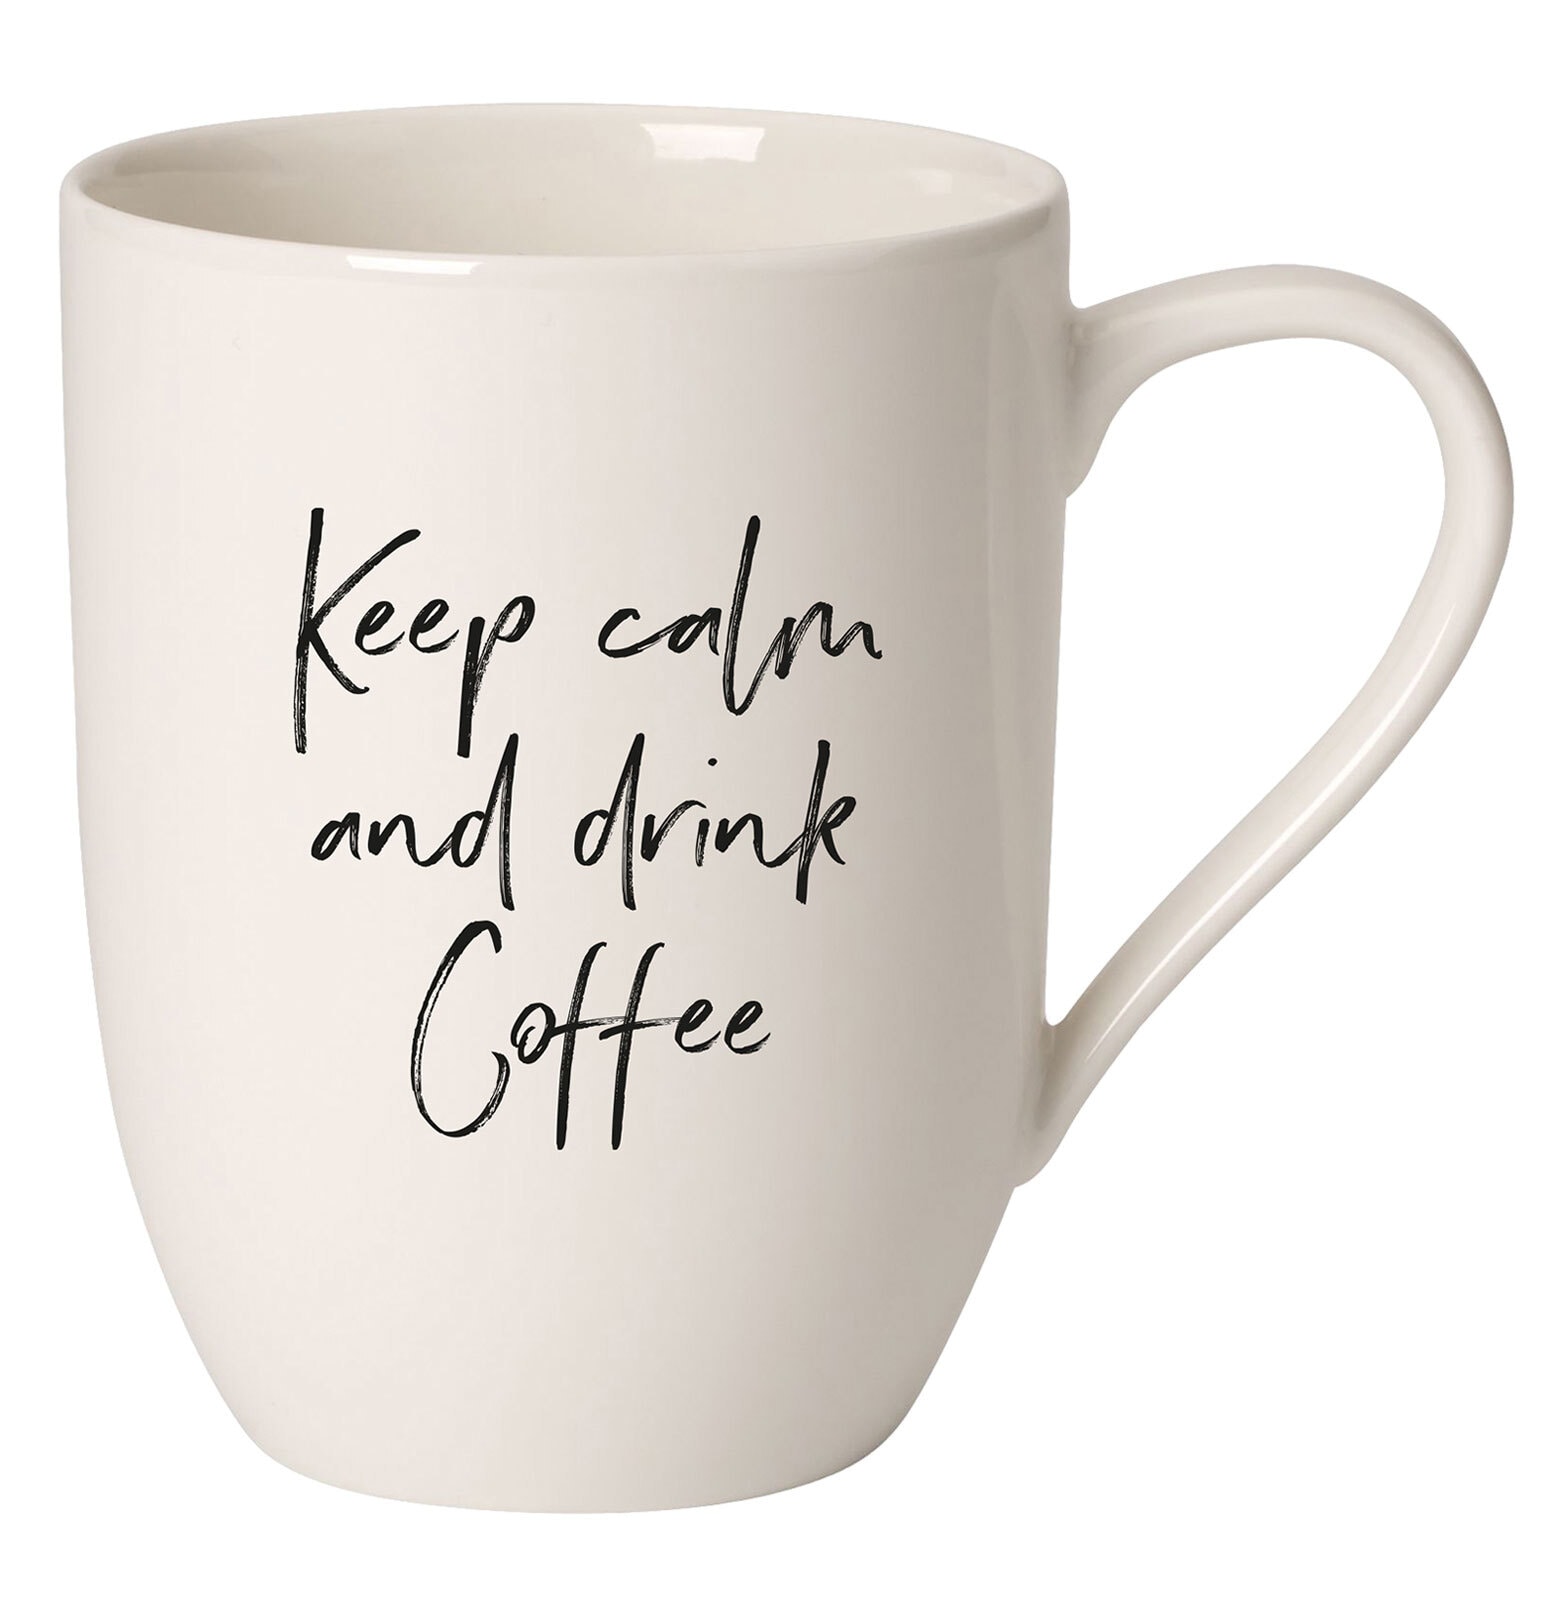 Villeroy & Boch Kaffeebecher STATEMENT KEEP CALM AND DRINK COFFEE